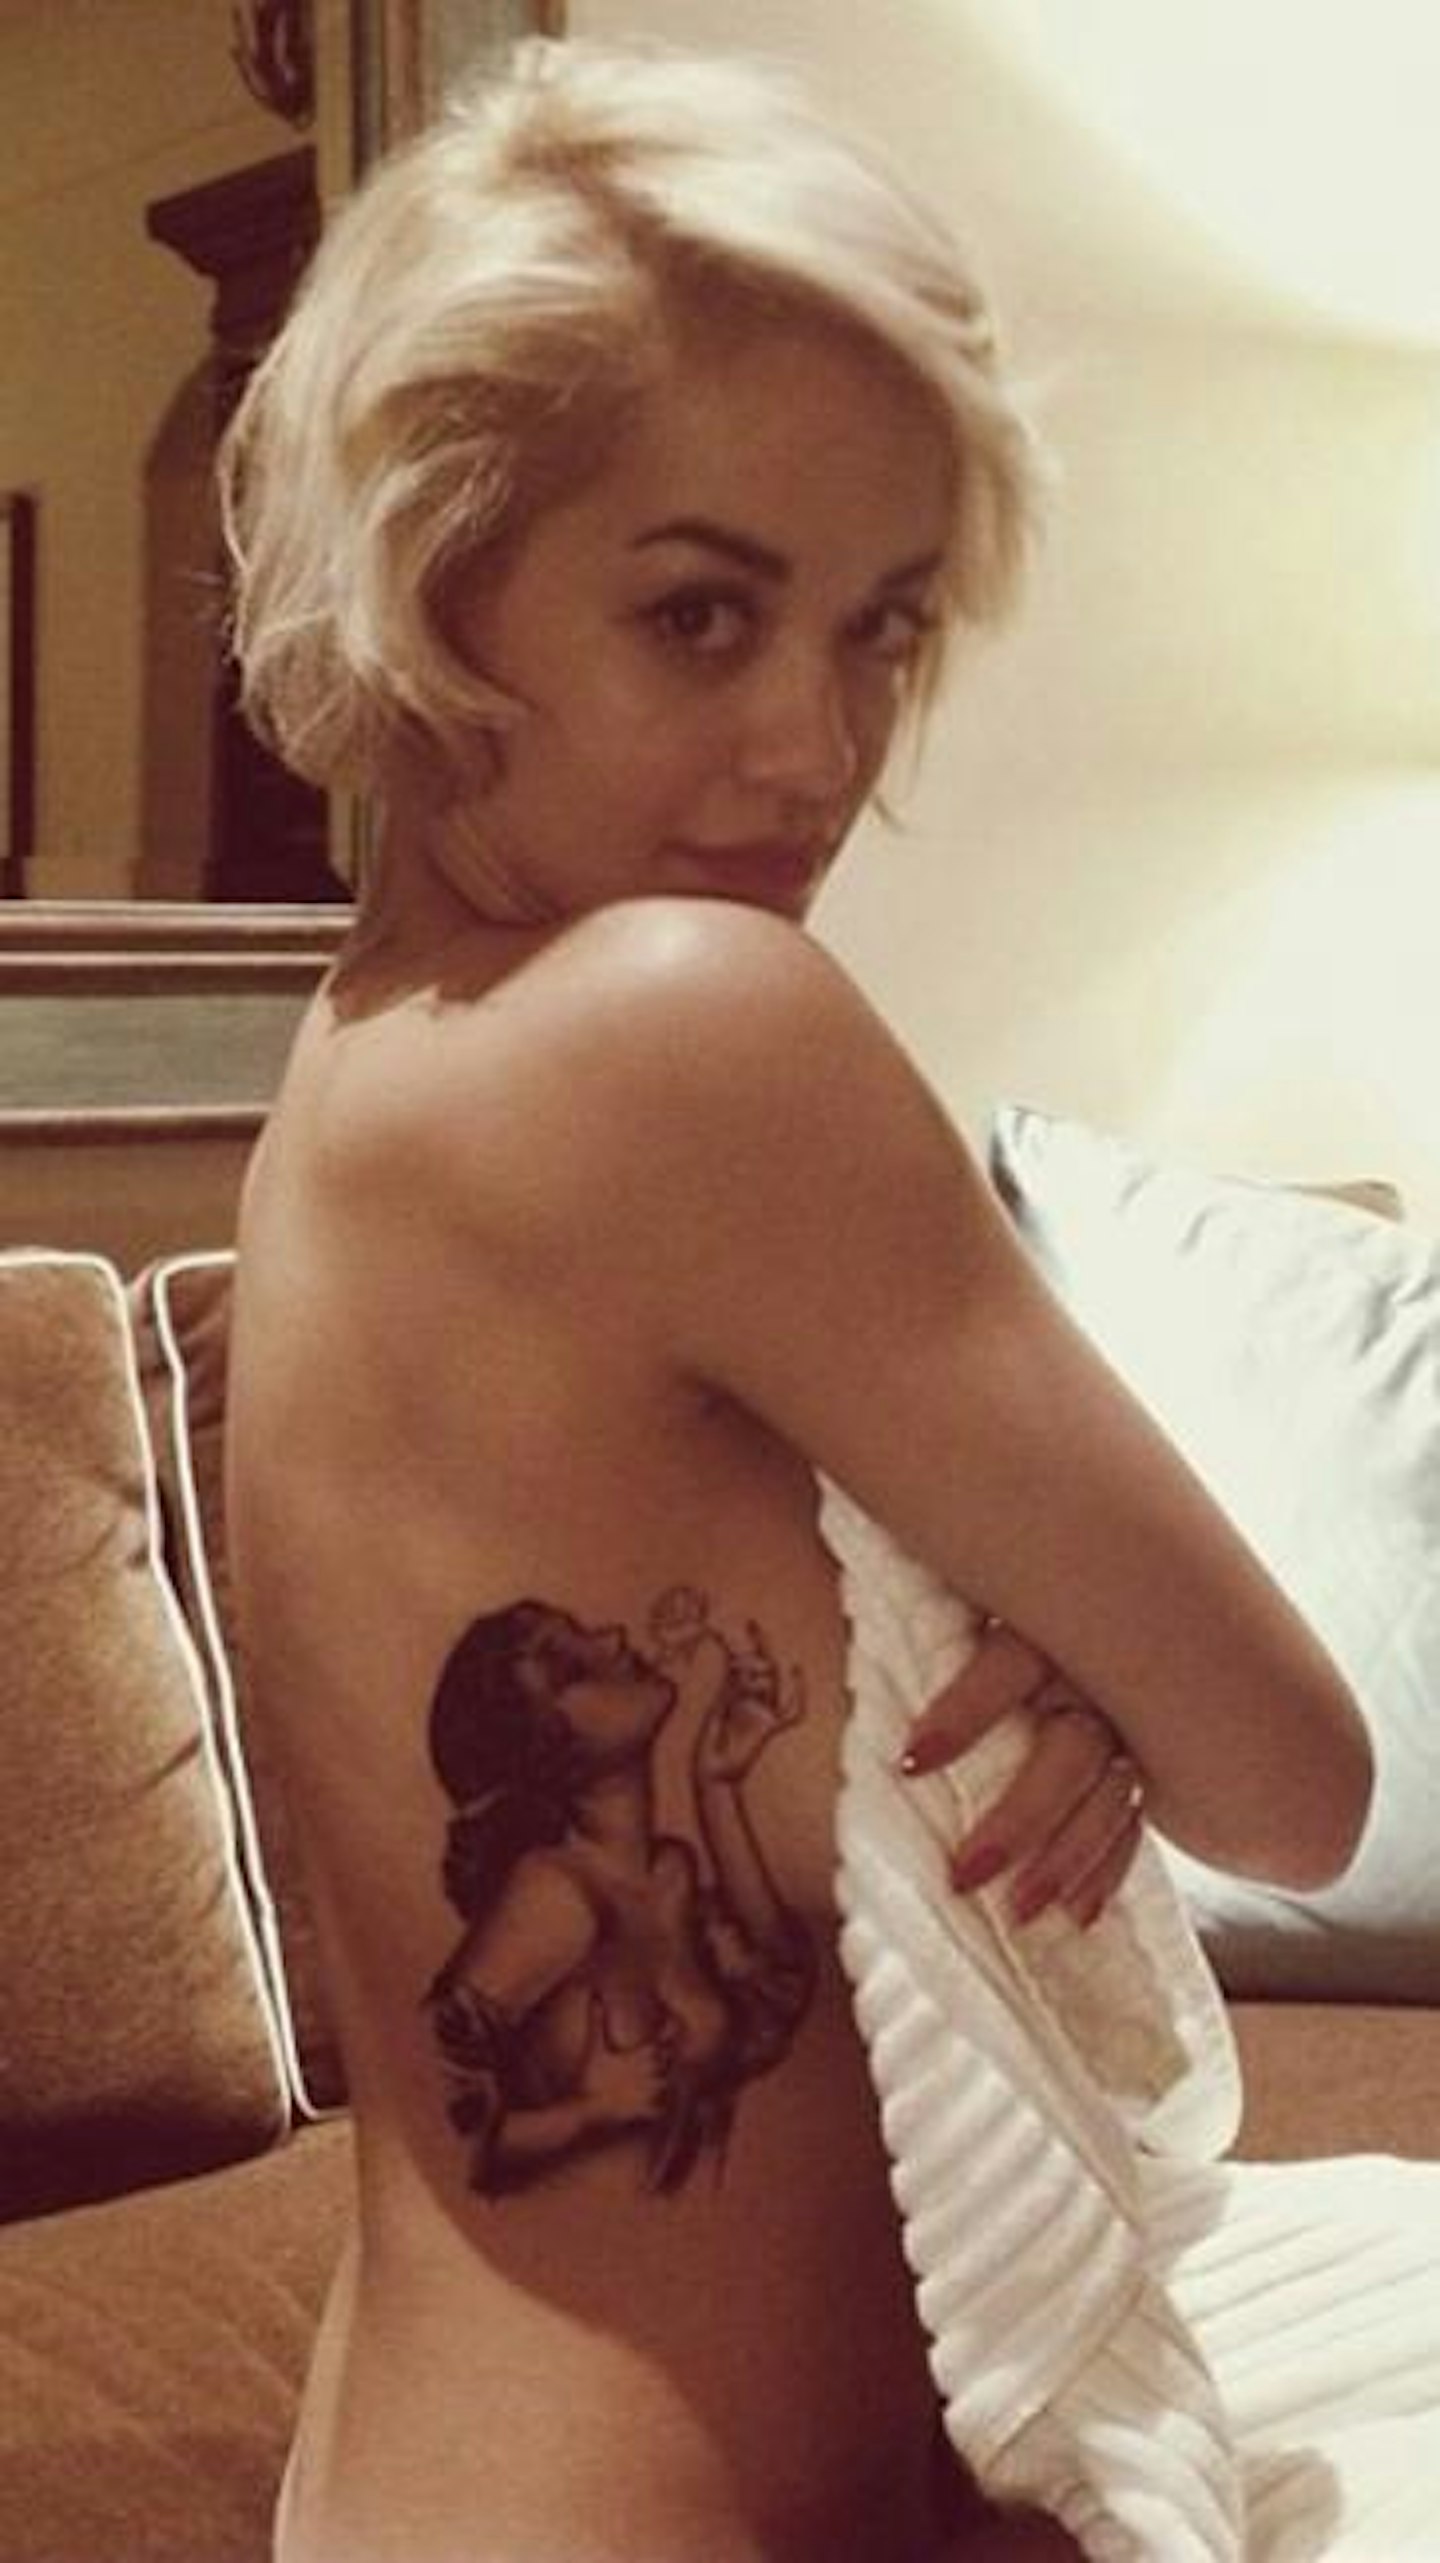 Rita Ora's tattoo